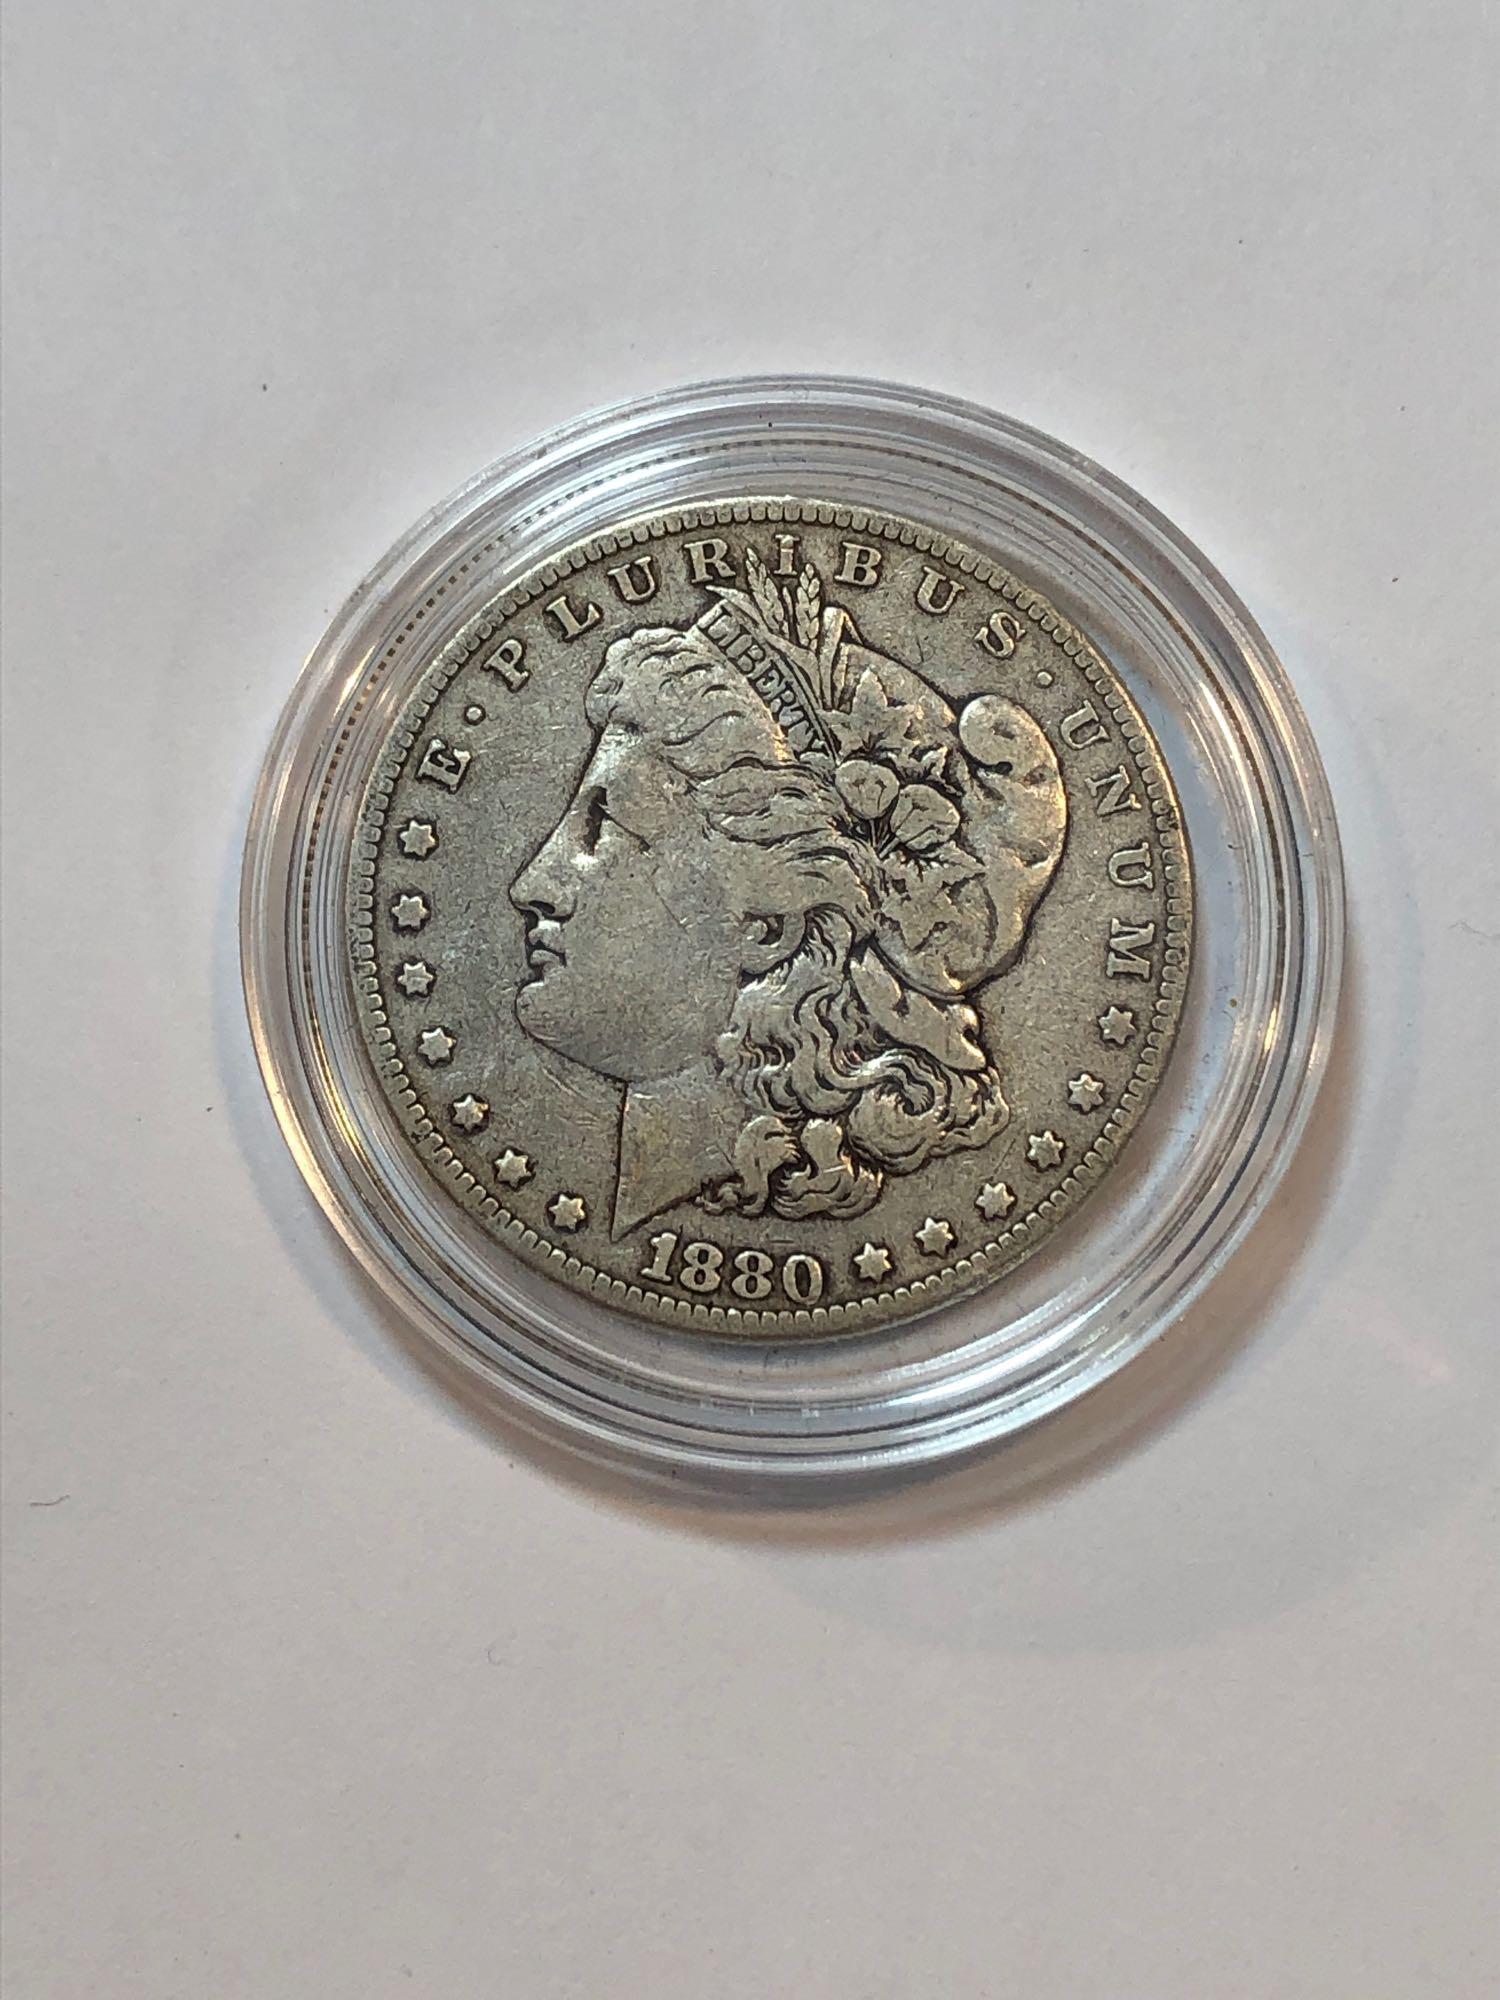 2 U.S. 1885 & 1880 Morgan Silver Dollars